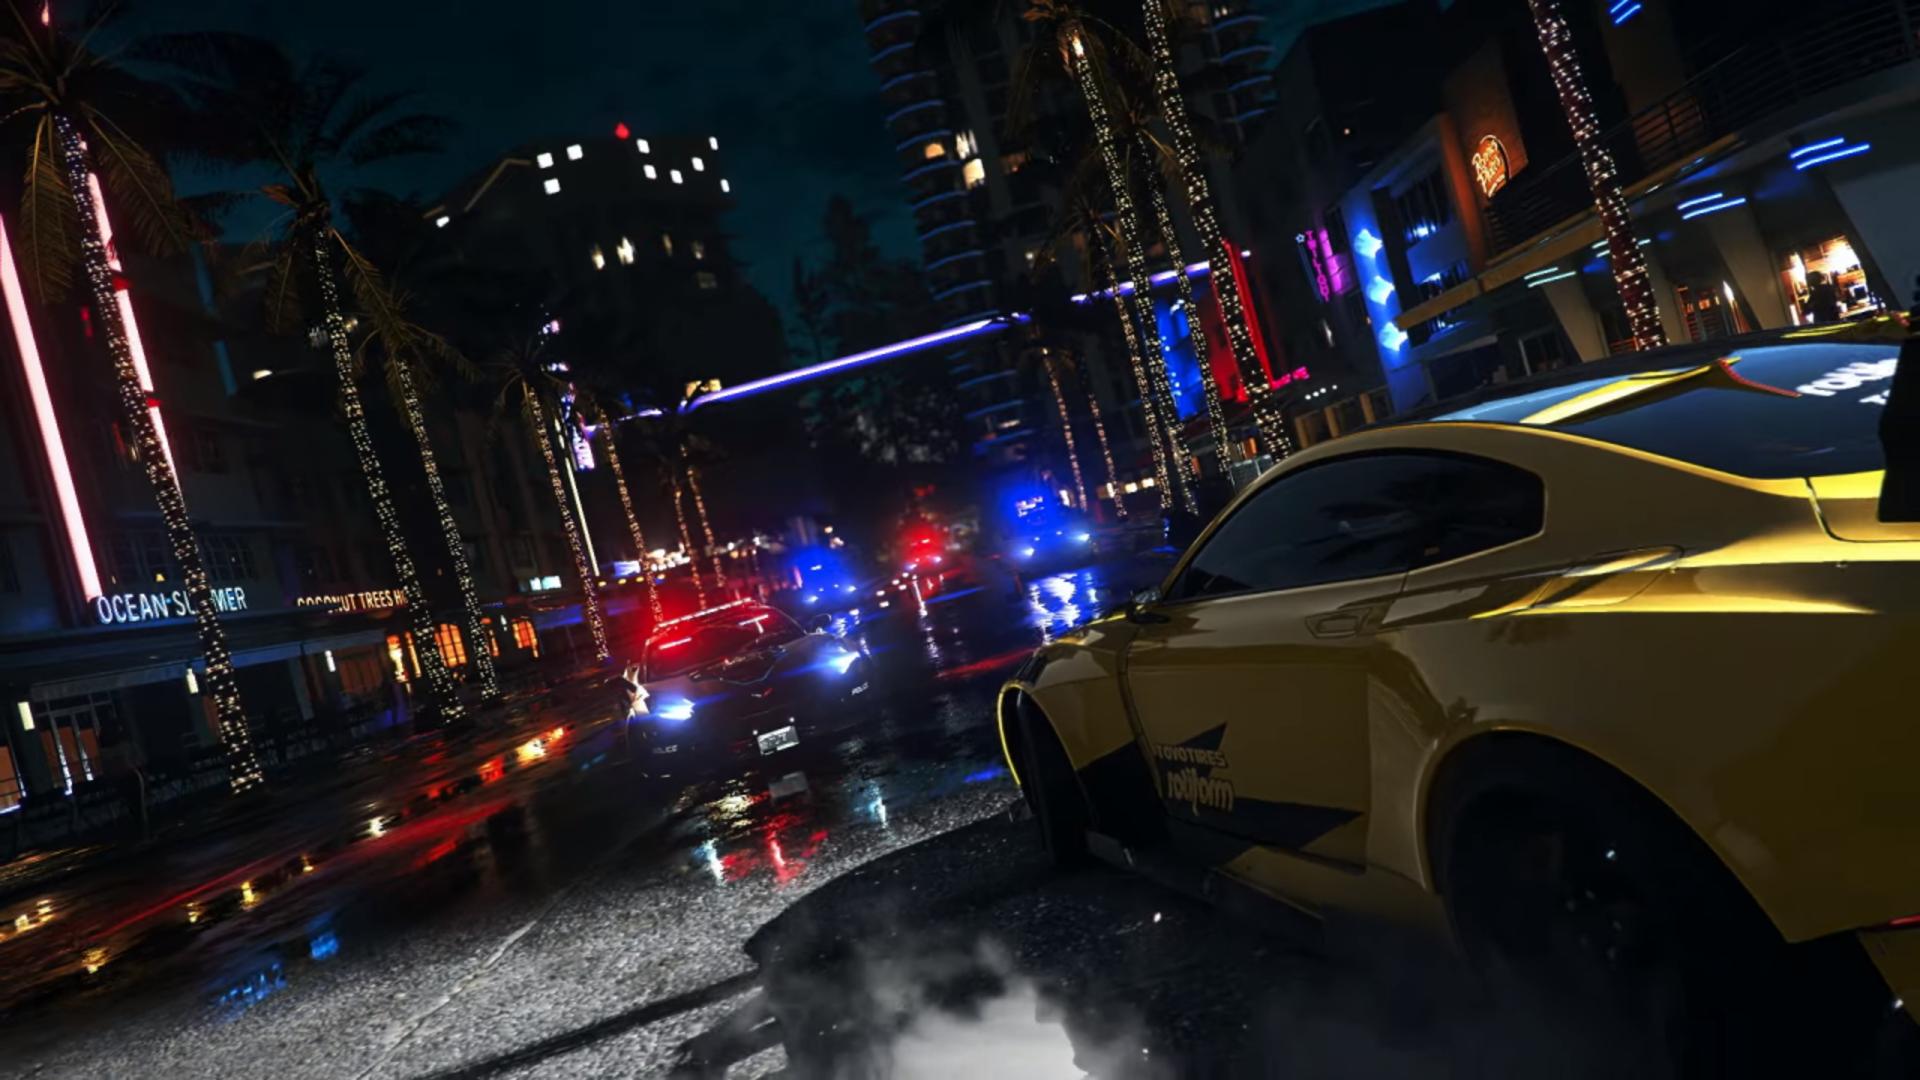 10 Best Online Car Games